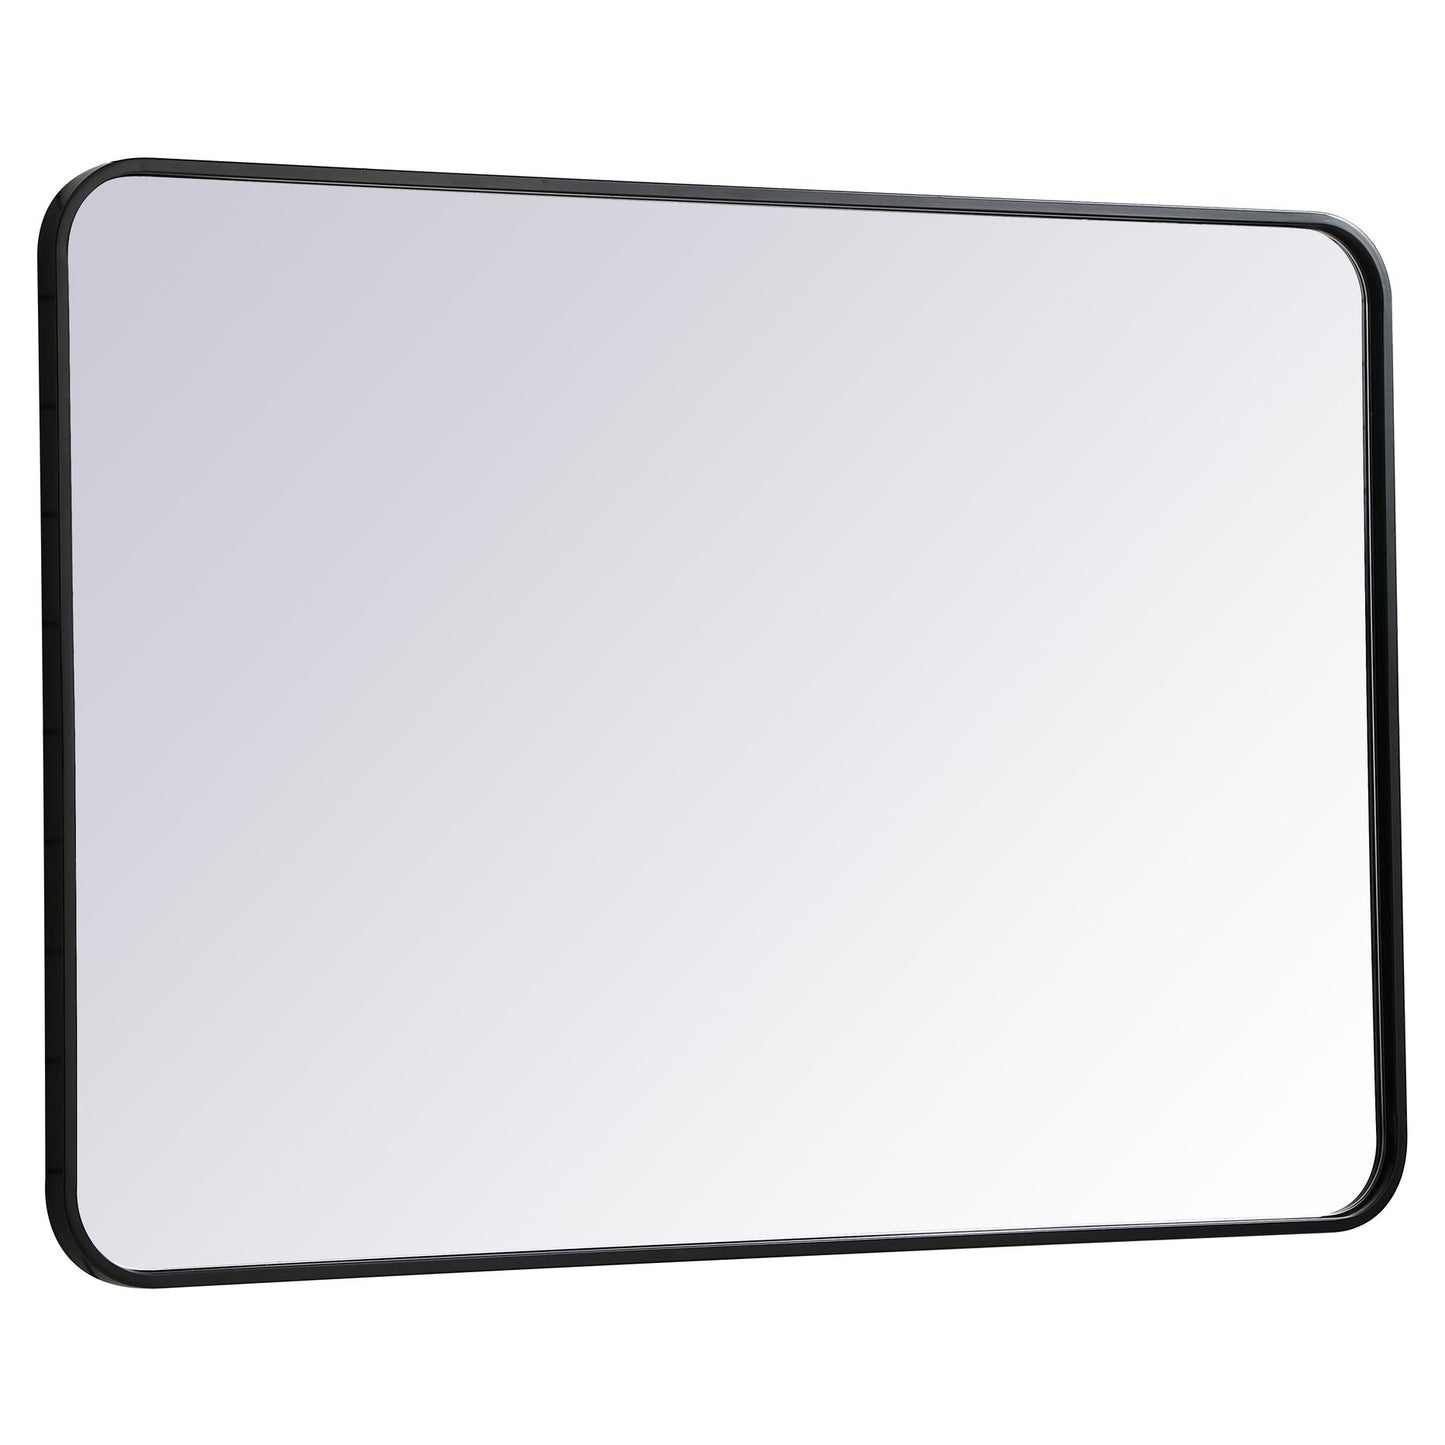 MR802740BK Evermore 27" x 40" Metal Framed Rectangular Mirror in Black